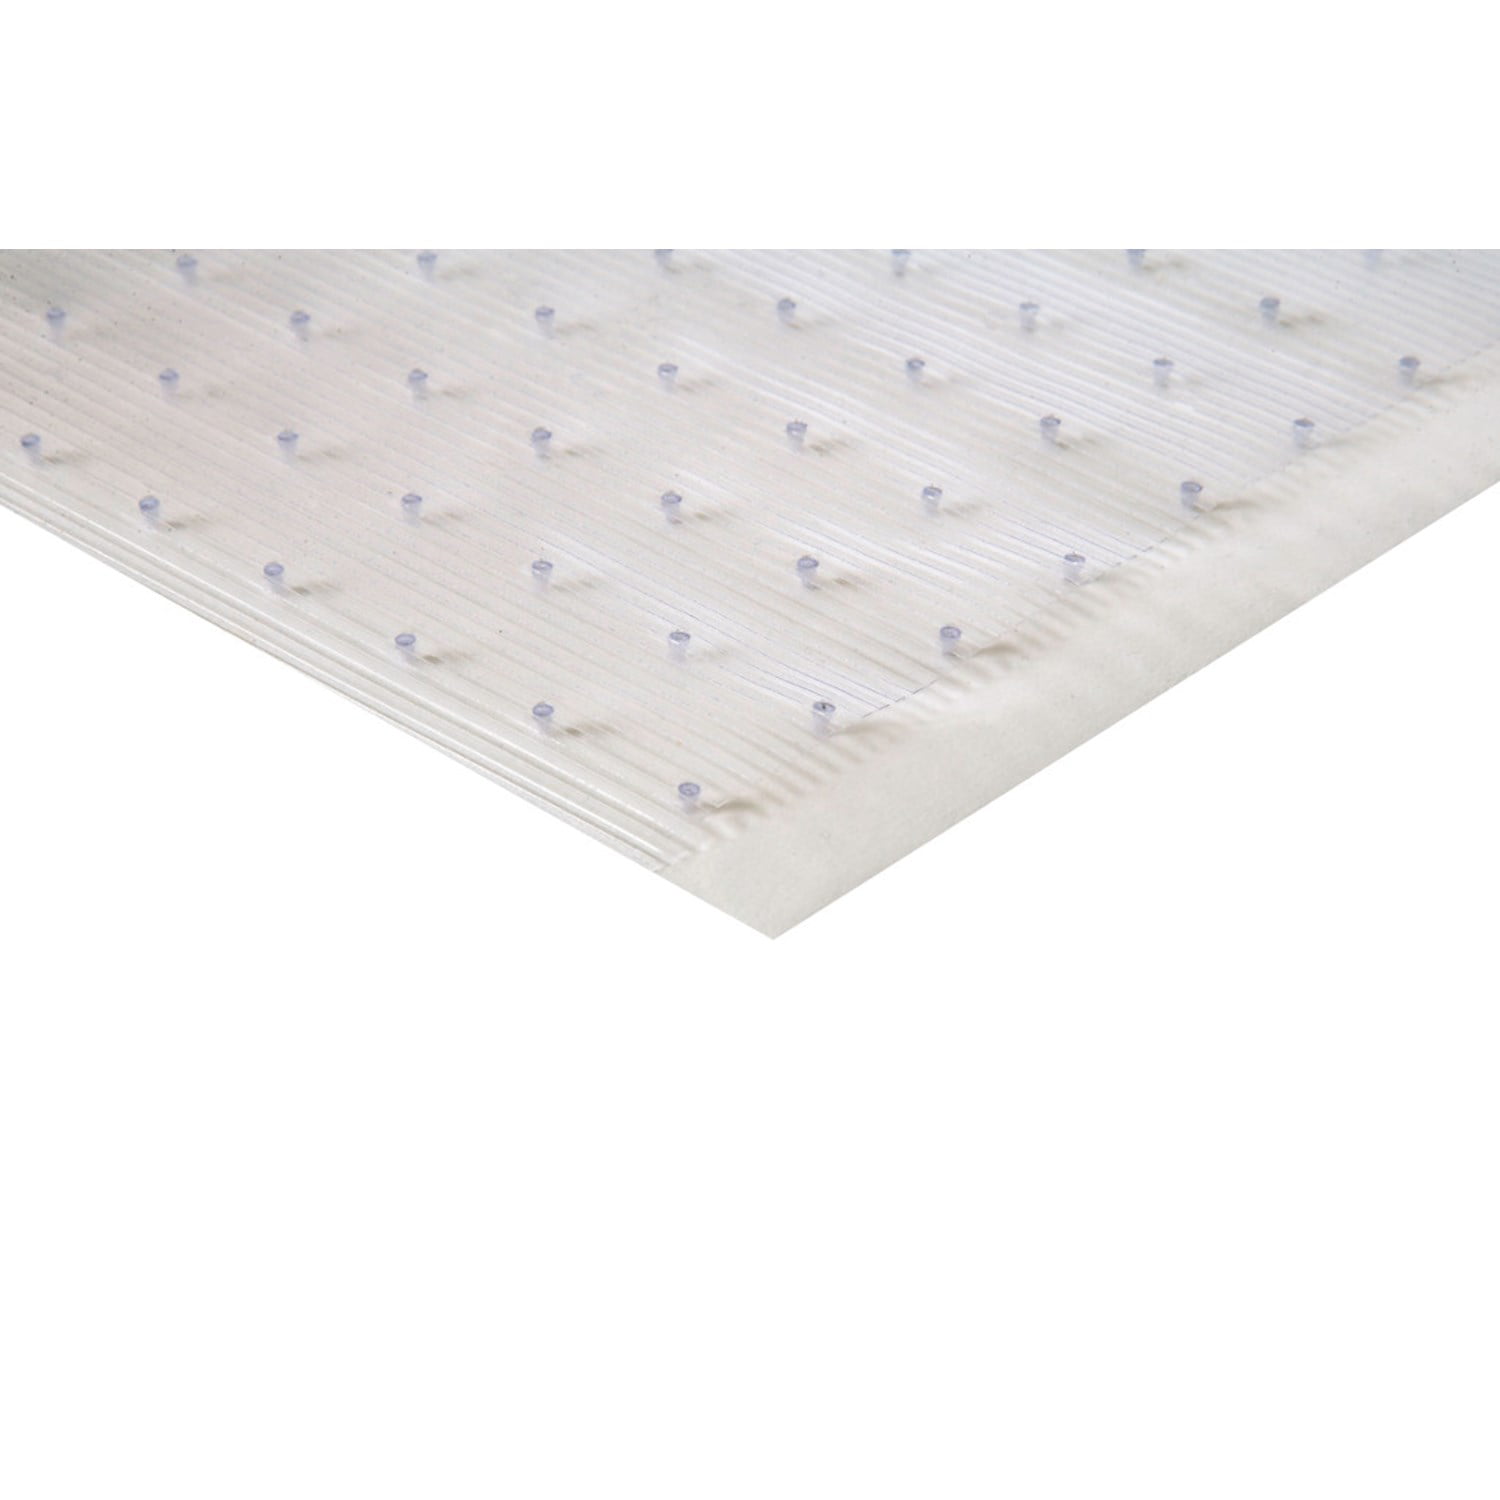 Clear Plastic Runner Rug Carpet Protector Mat Ribbed Multi Grip 18in x 26in 